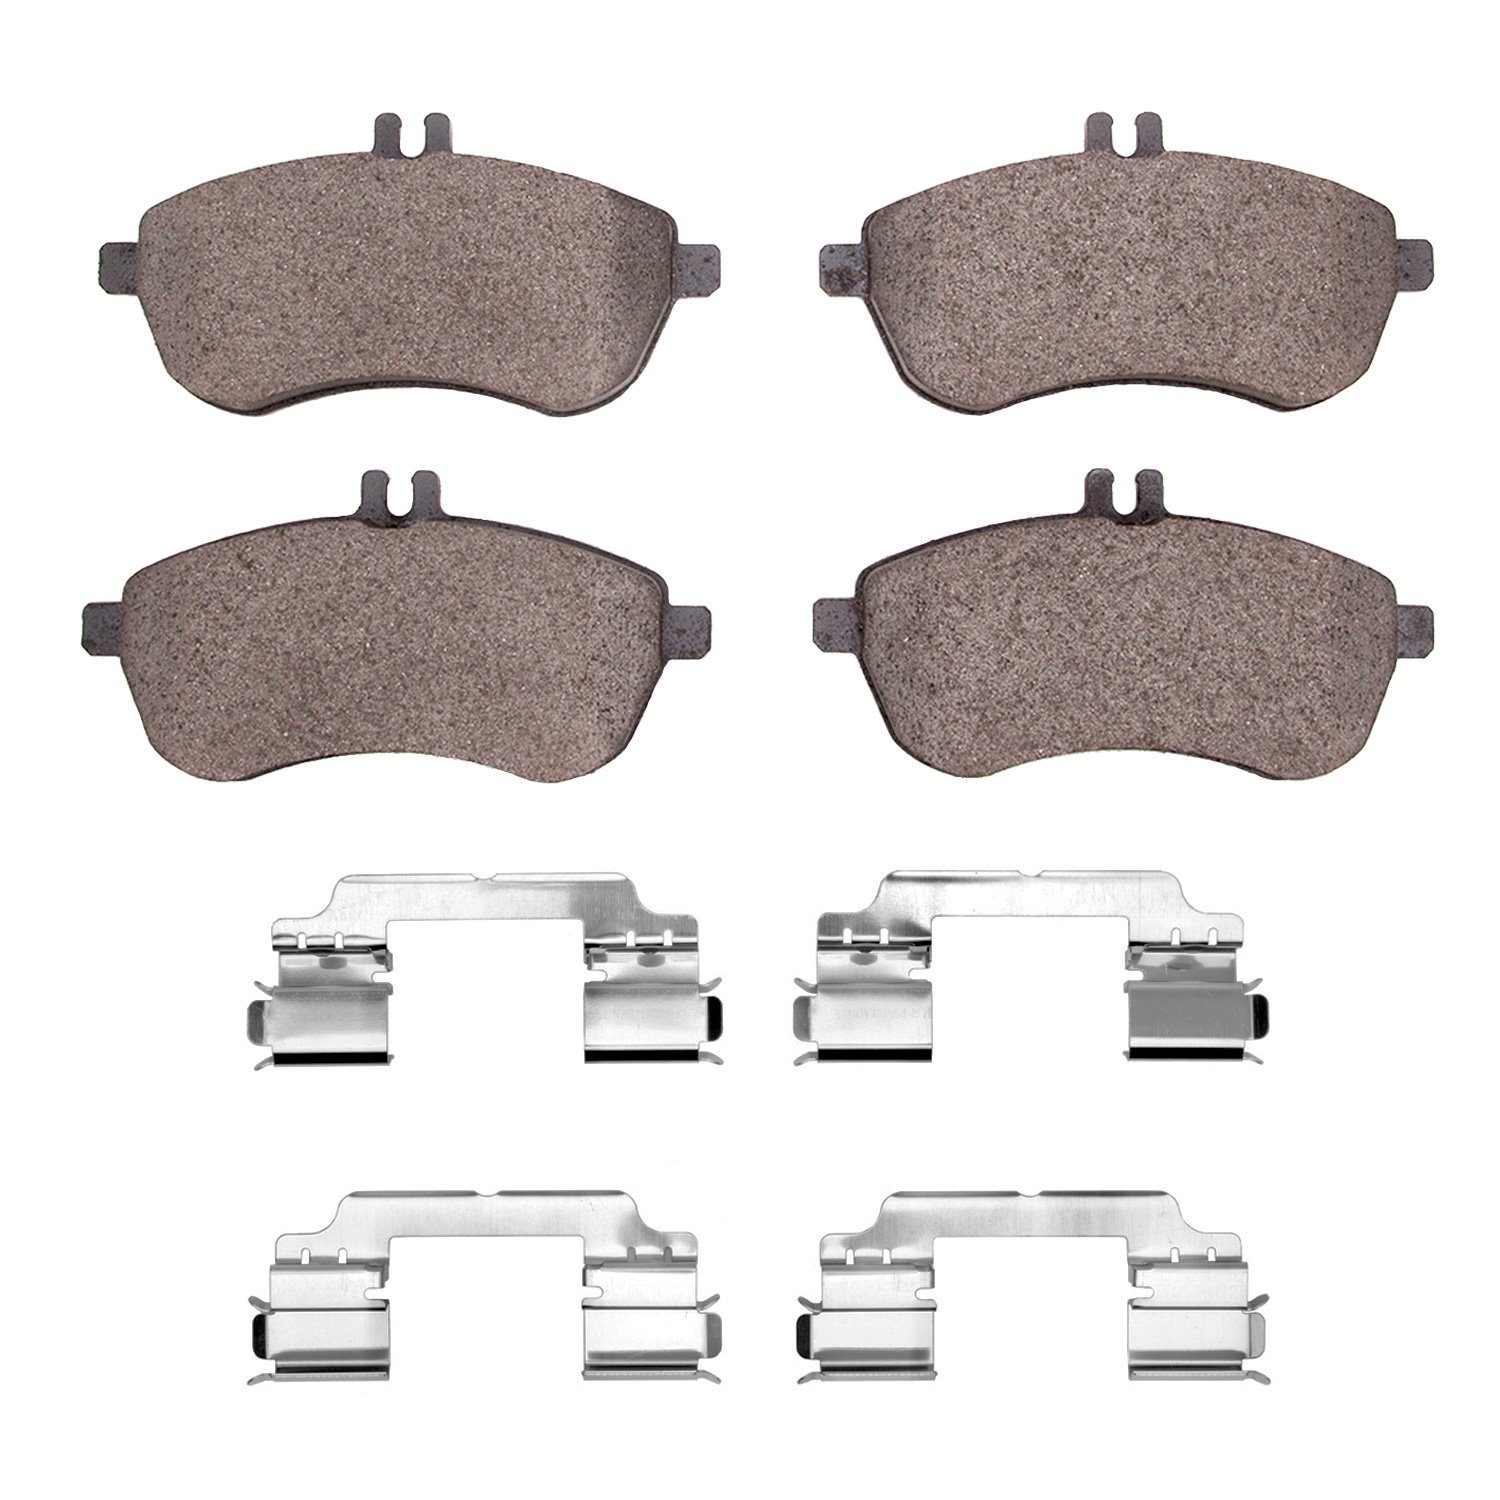 1552-1340-01 5000 Advanced Low-Metallic Brake Pads & Hardware Kit, 2008-2015 Mercedes-Benz, Position: Front